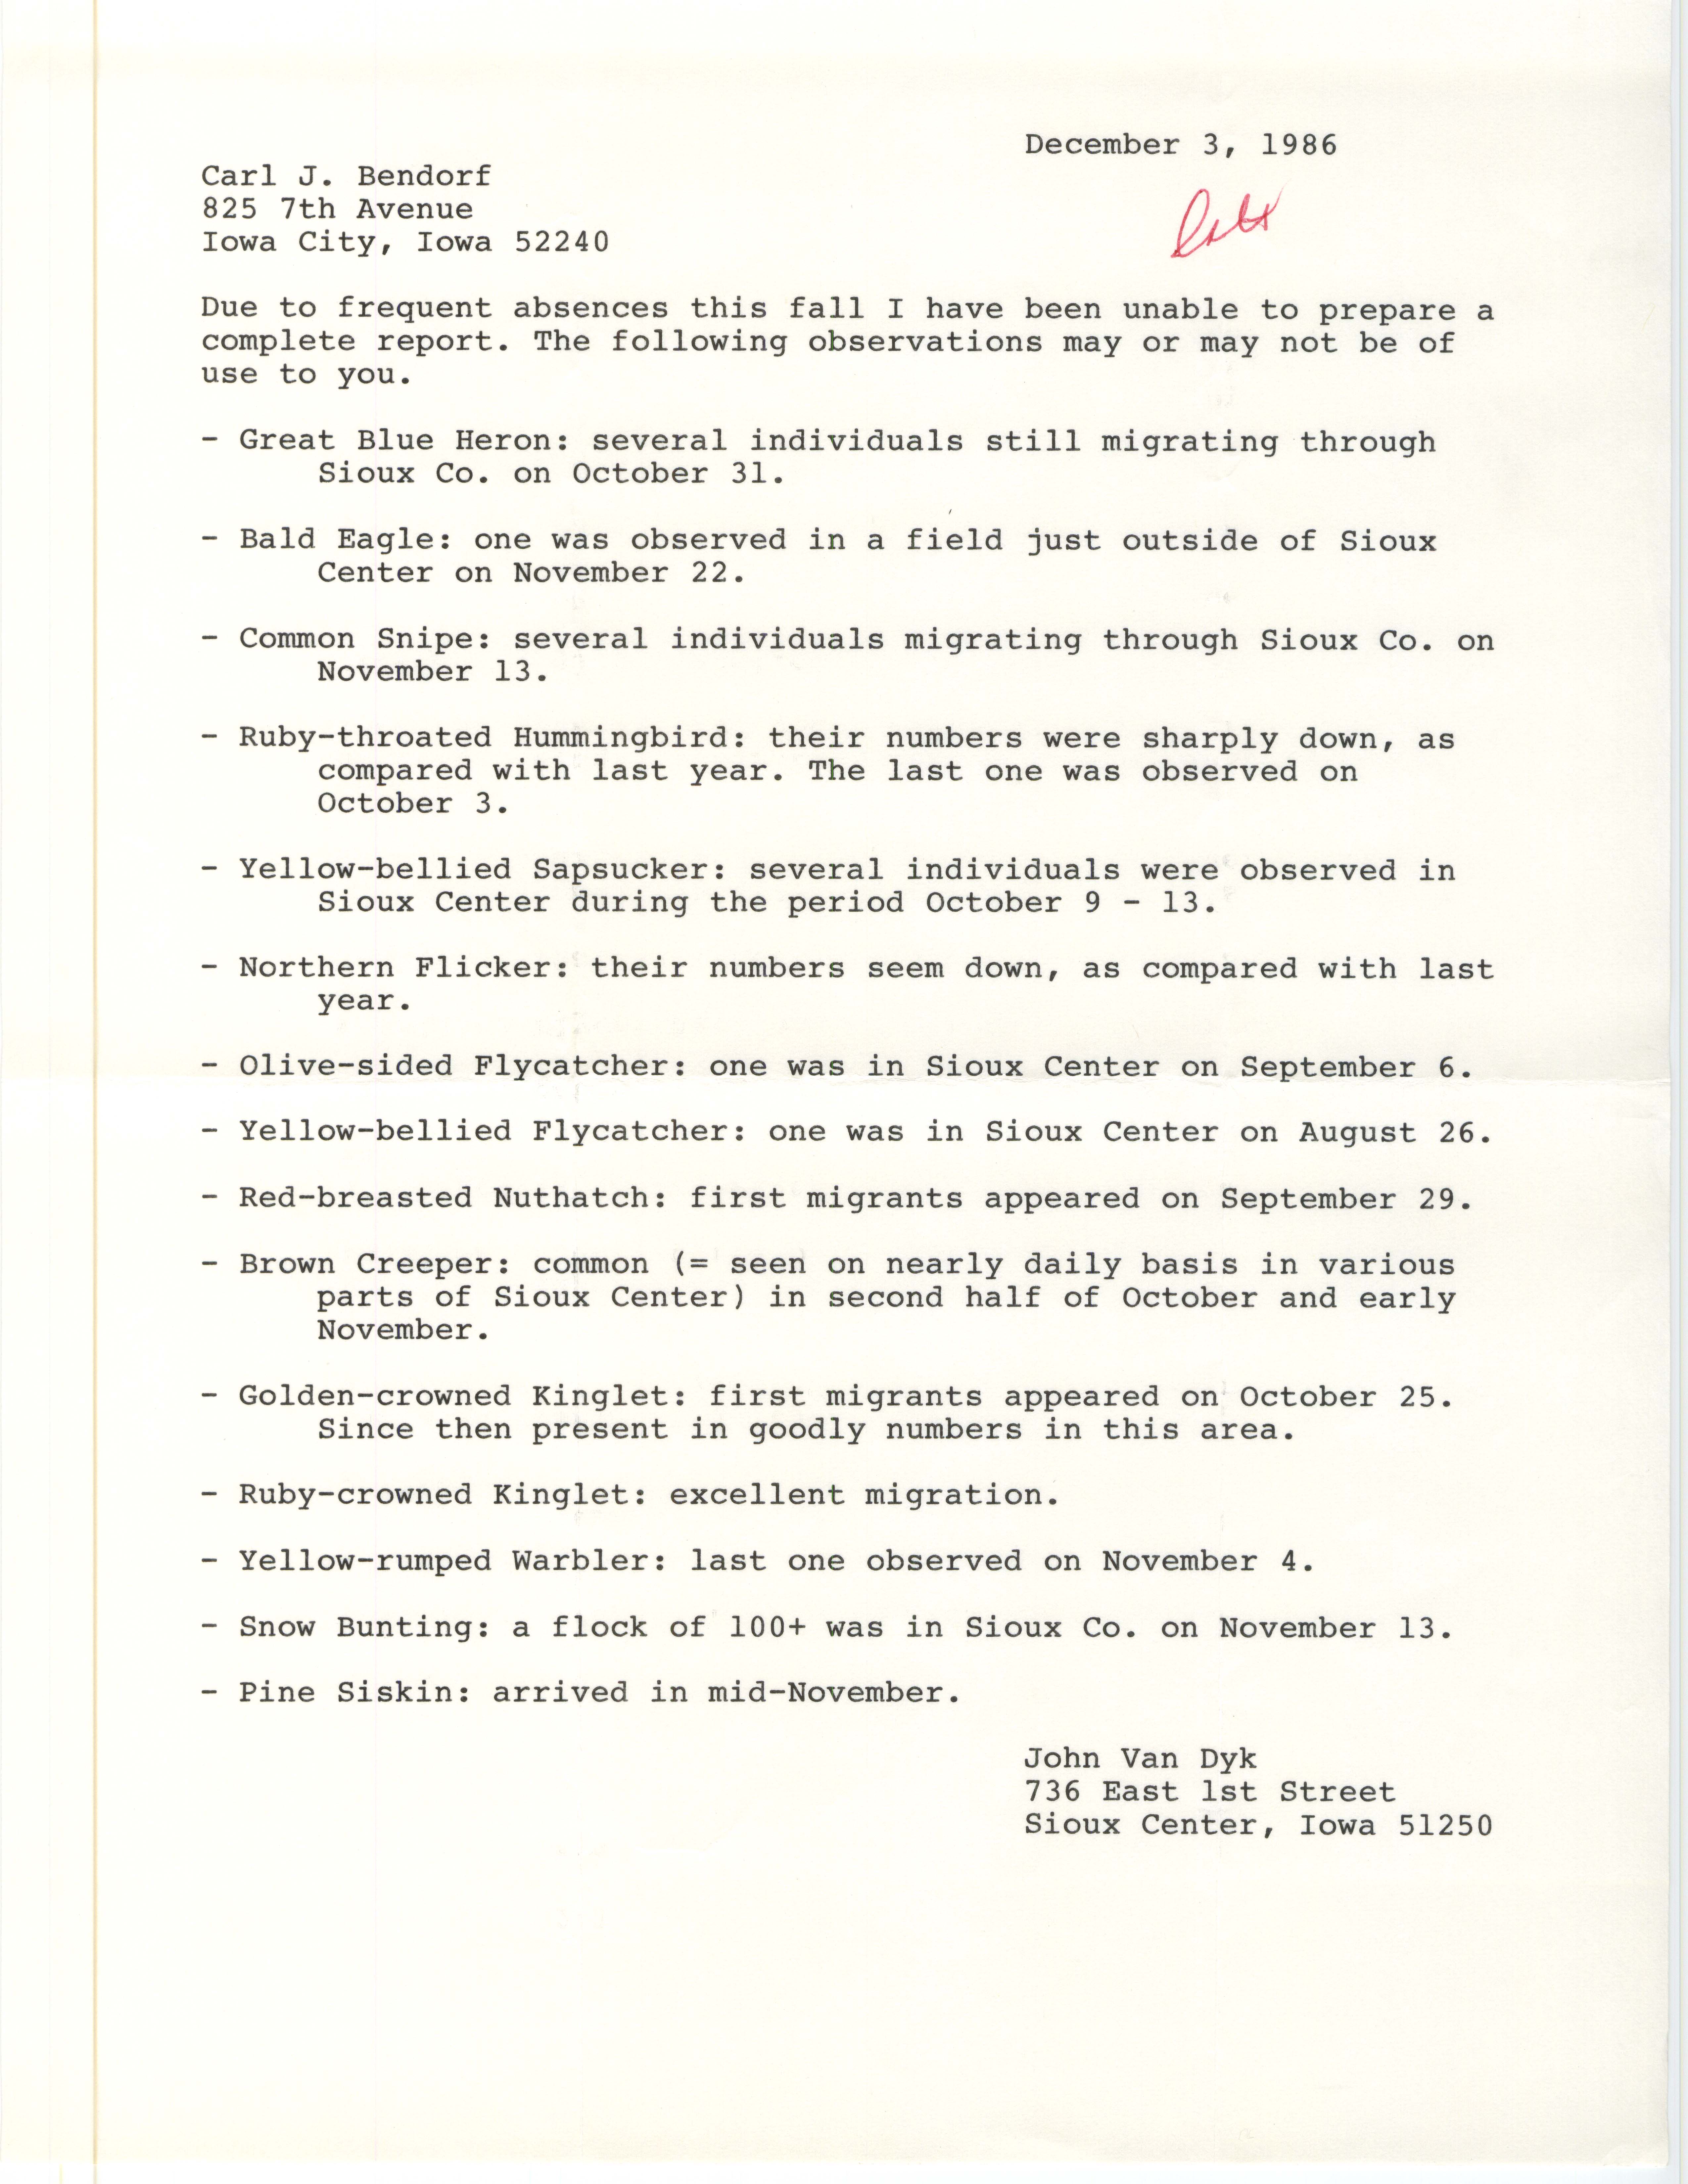 John Van Dyke letter to Carl J. Bendorf regarding bird sightings, December 3, 1986